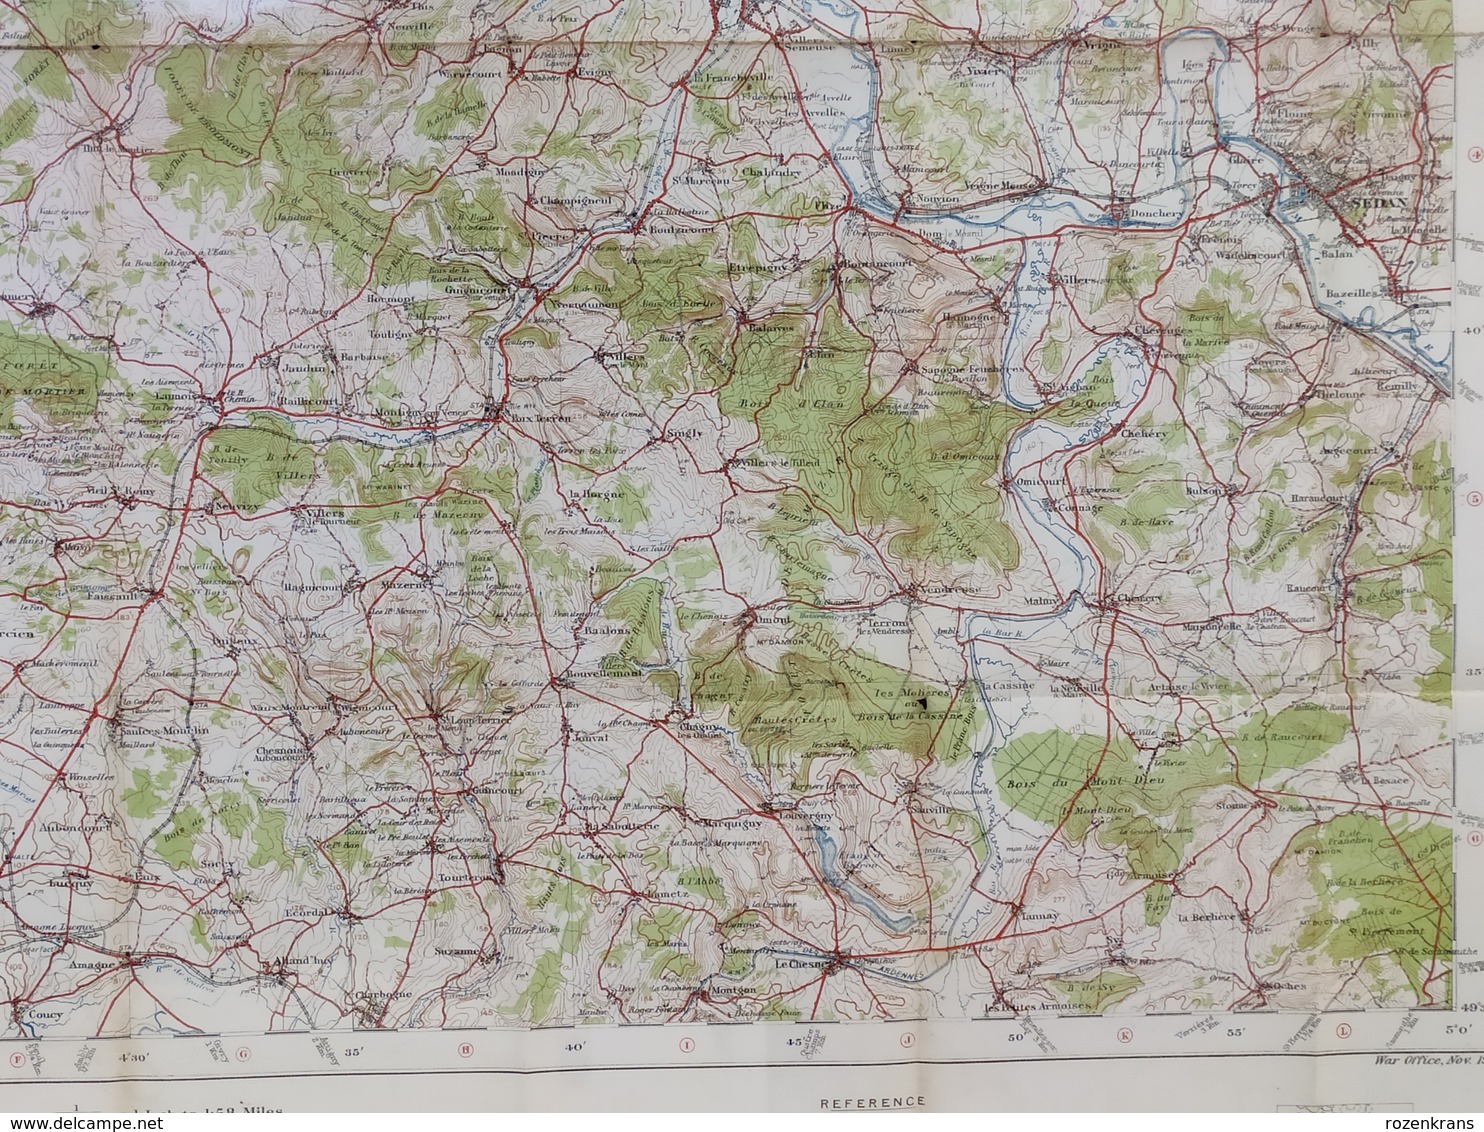 Carte Topographique Militaire UK War Office 1915 World War 1 WW1 Charlesville Mezieres Sedan Rocroi Hirson Sugny Rethel